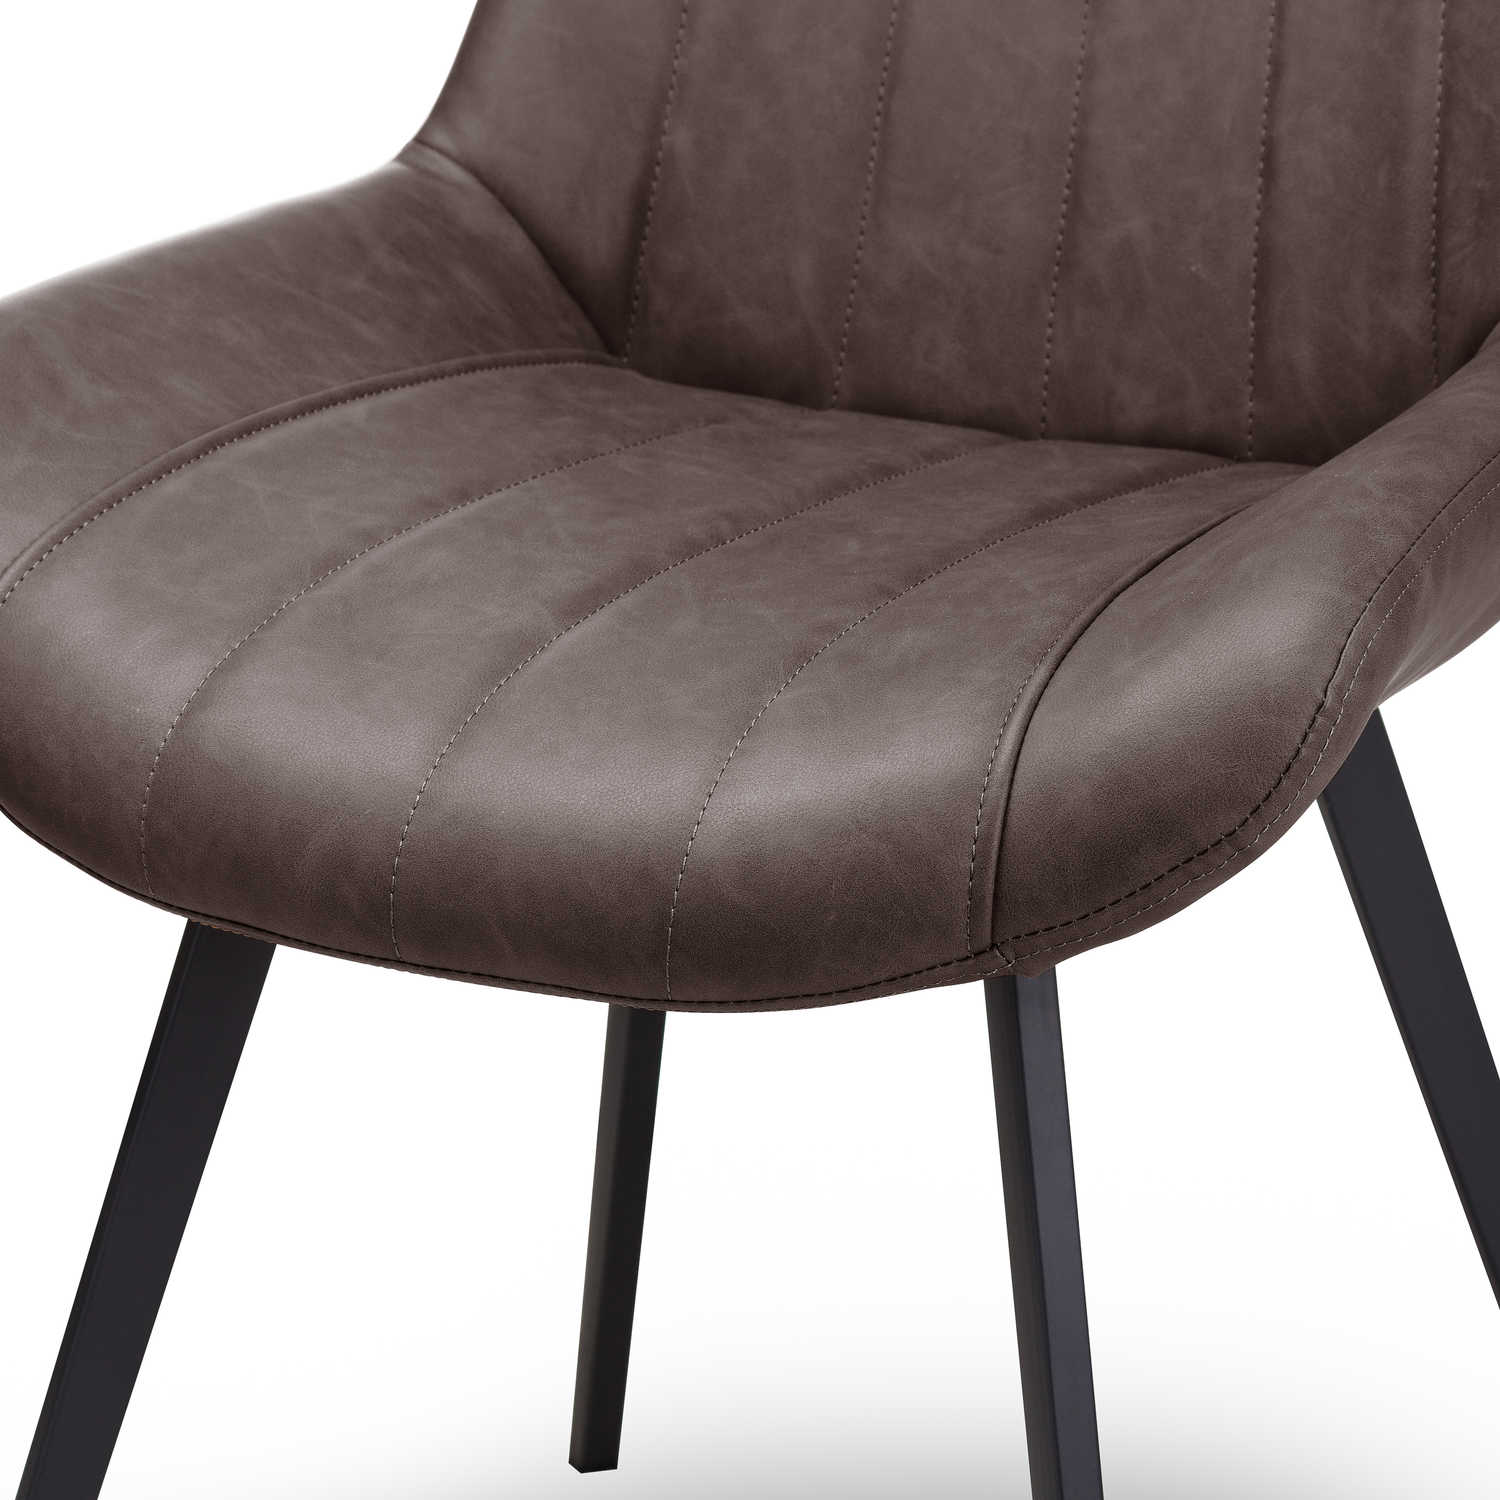 The Grey Copenhagen Dining Chair